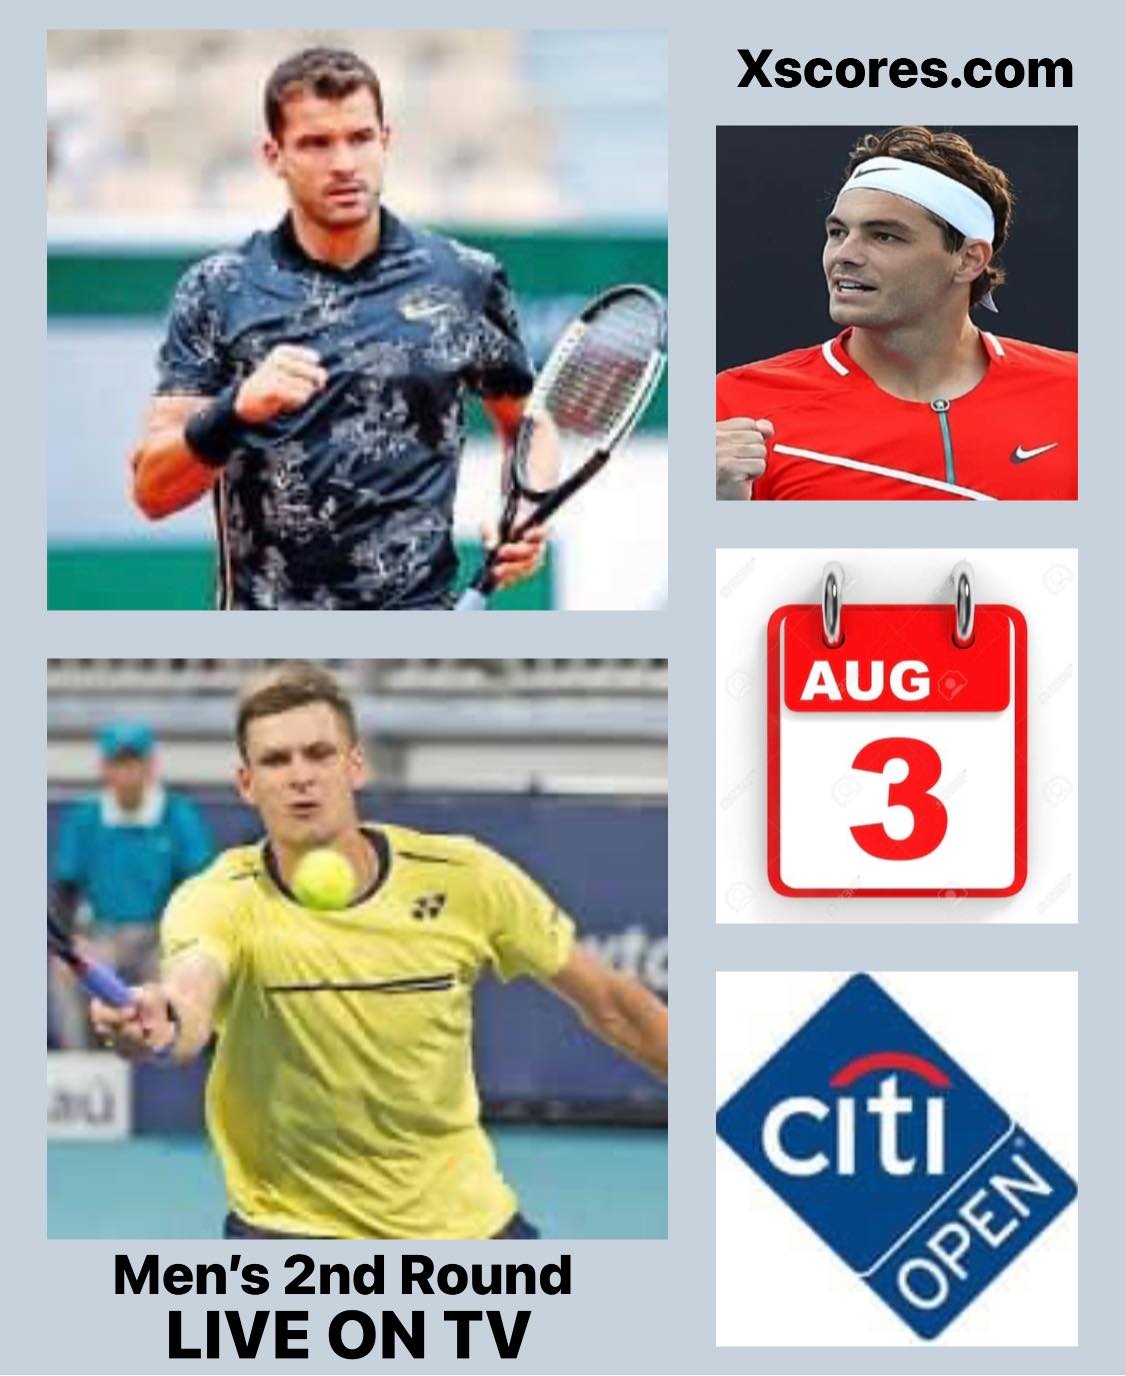 Tennis- ATP 500 - Surface Hard - Citi Open, Washington, DC, U.S.A. (August 01st - 07th 2022